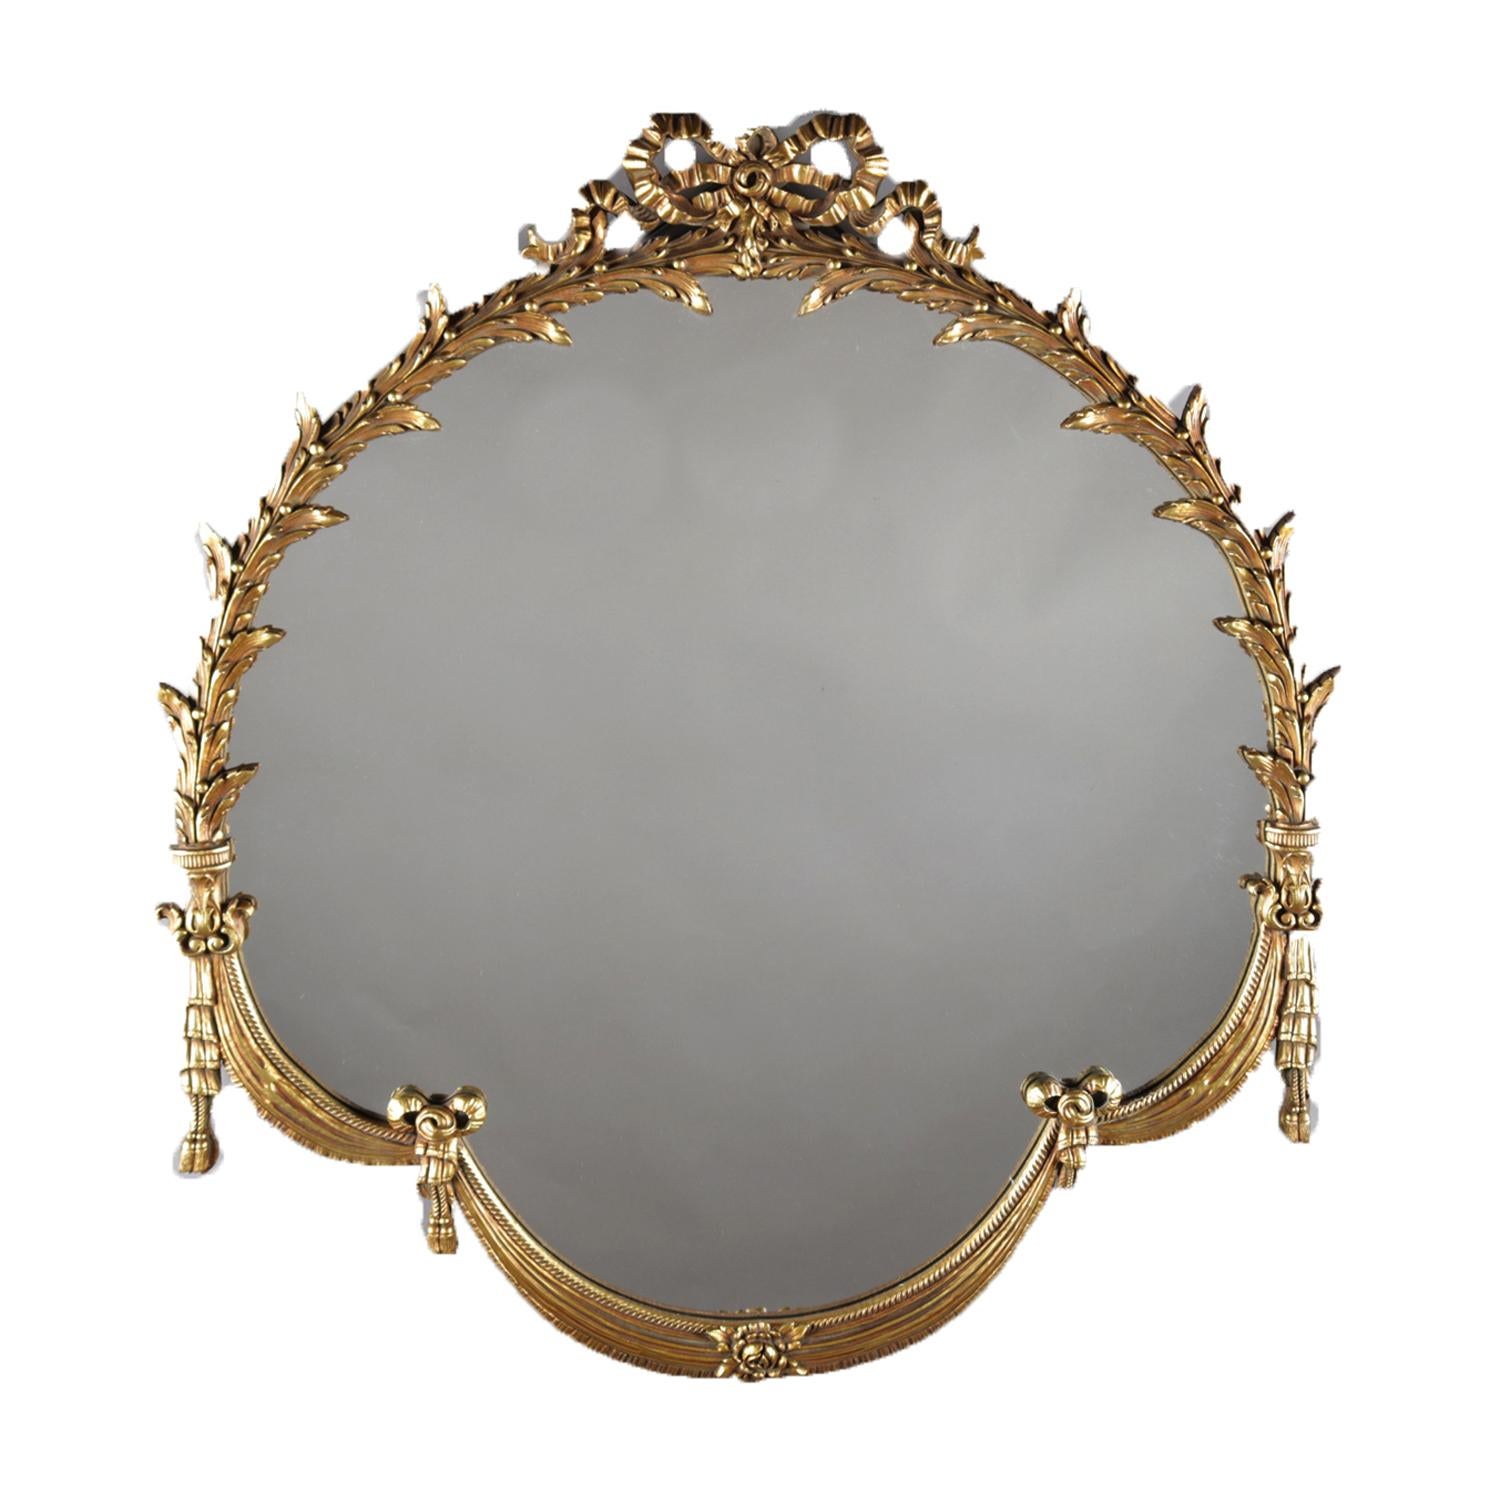 French Louis XV Style Foliate and Drape Giltwood Wall Mirror, 20th Century (20. Jahrhundert)